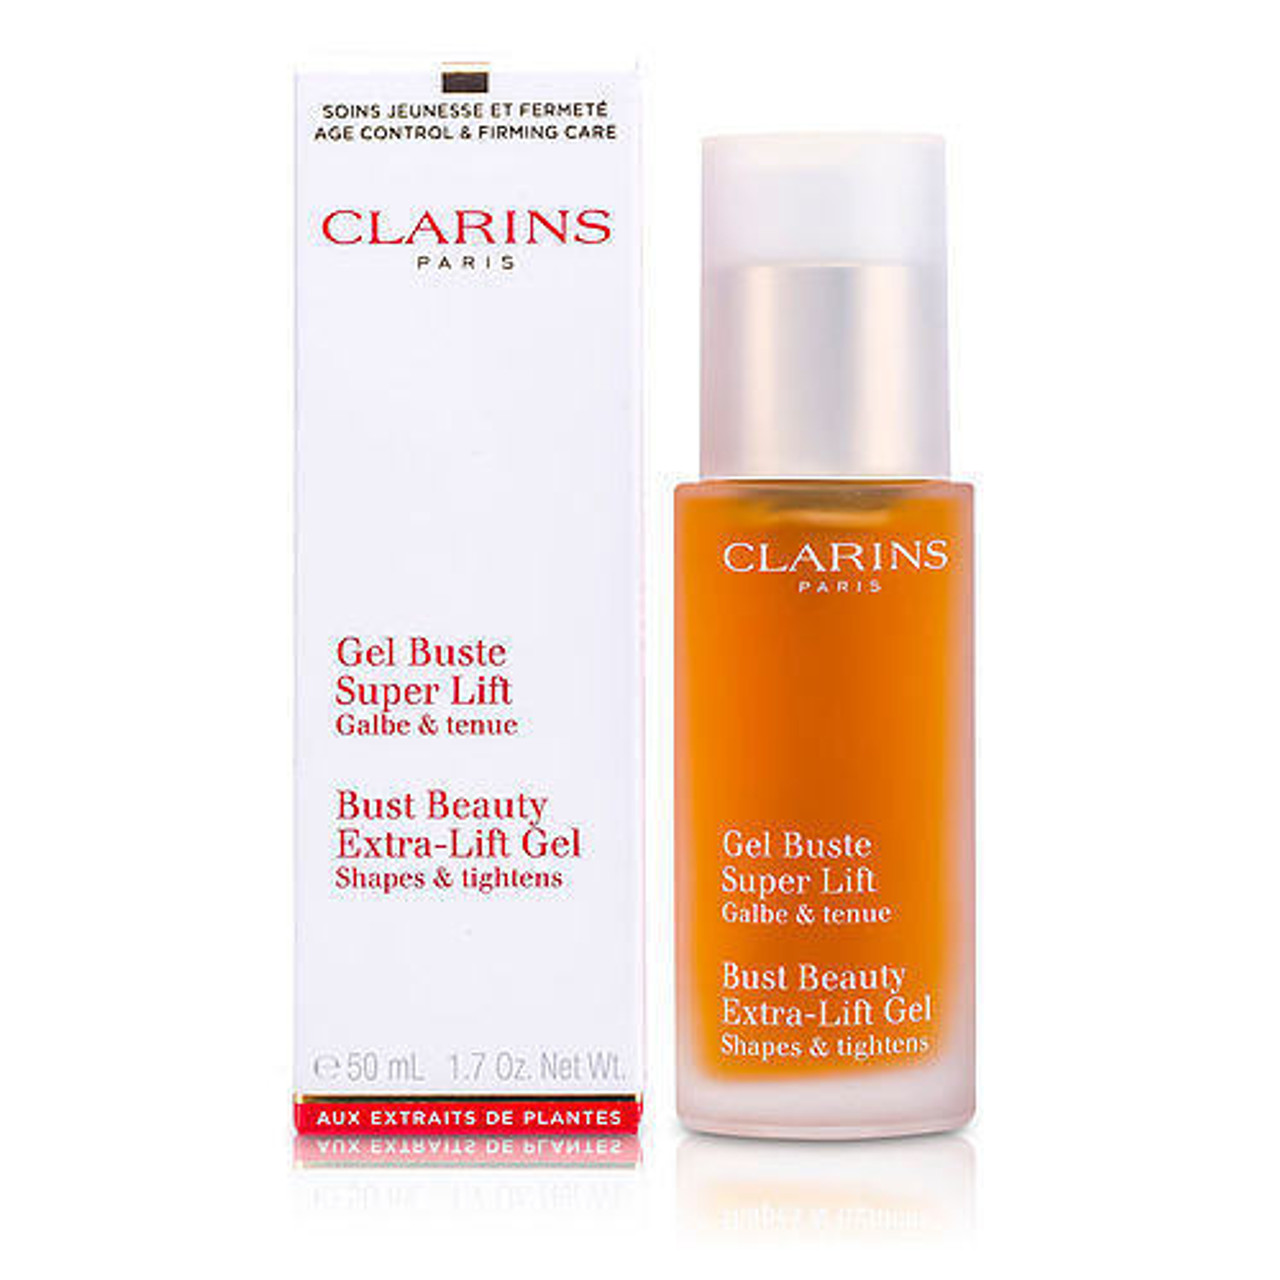 Clarins Bust Beauty Extra-Lift Gel - 1.7 oz bottle